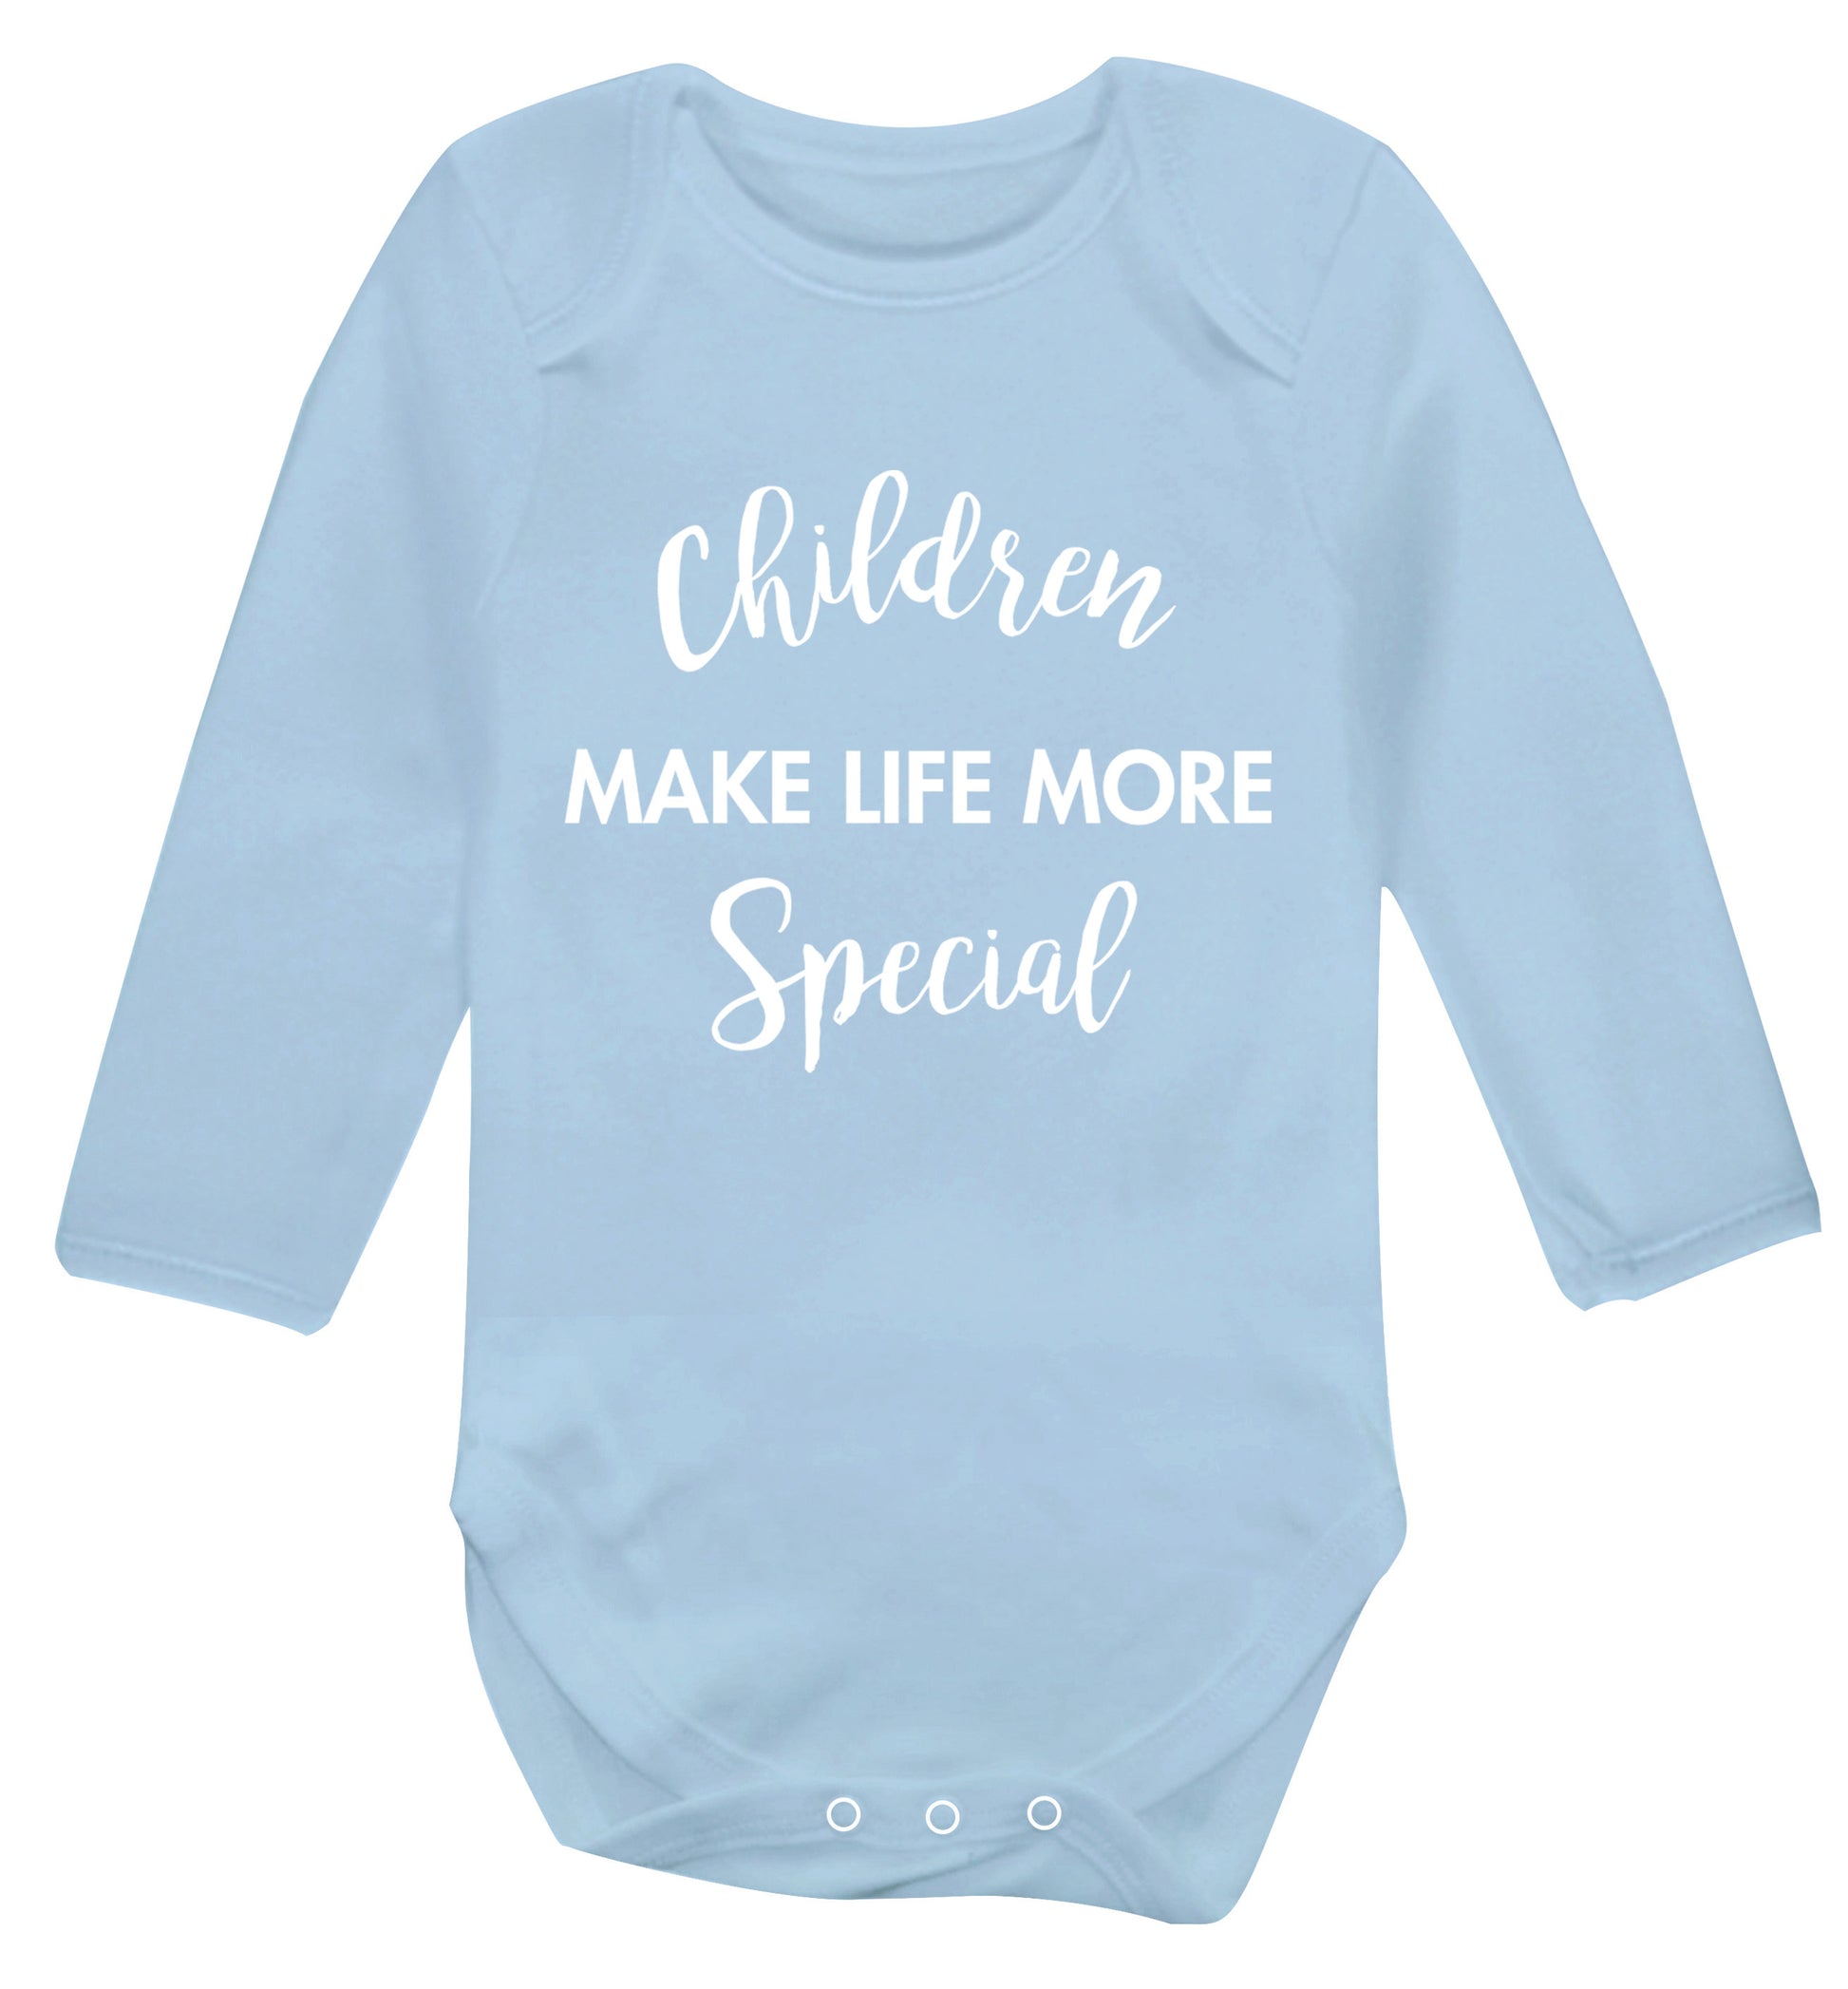 Children make life more special Baby Vest long sleeved pale blue 6-12 months